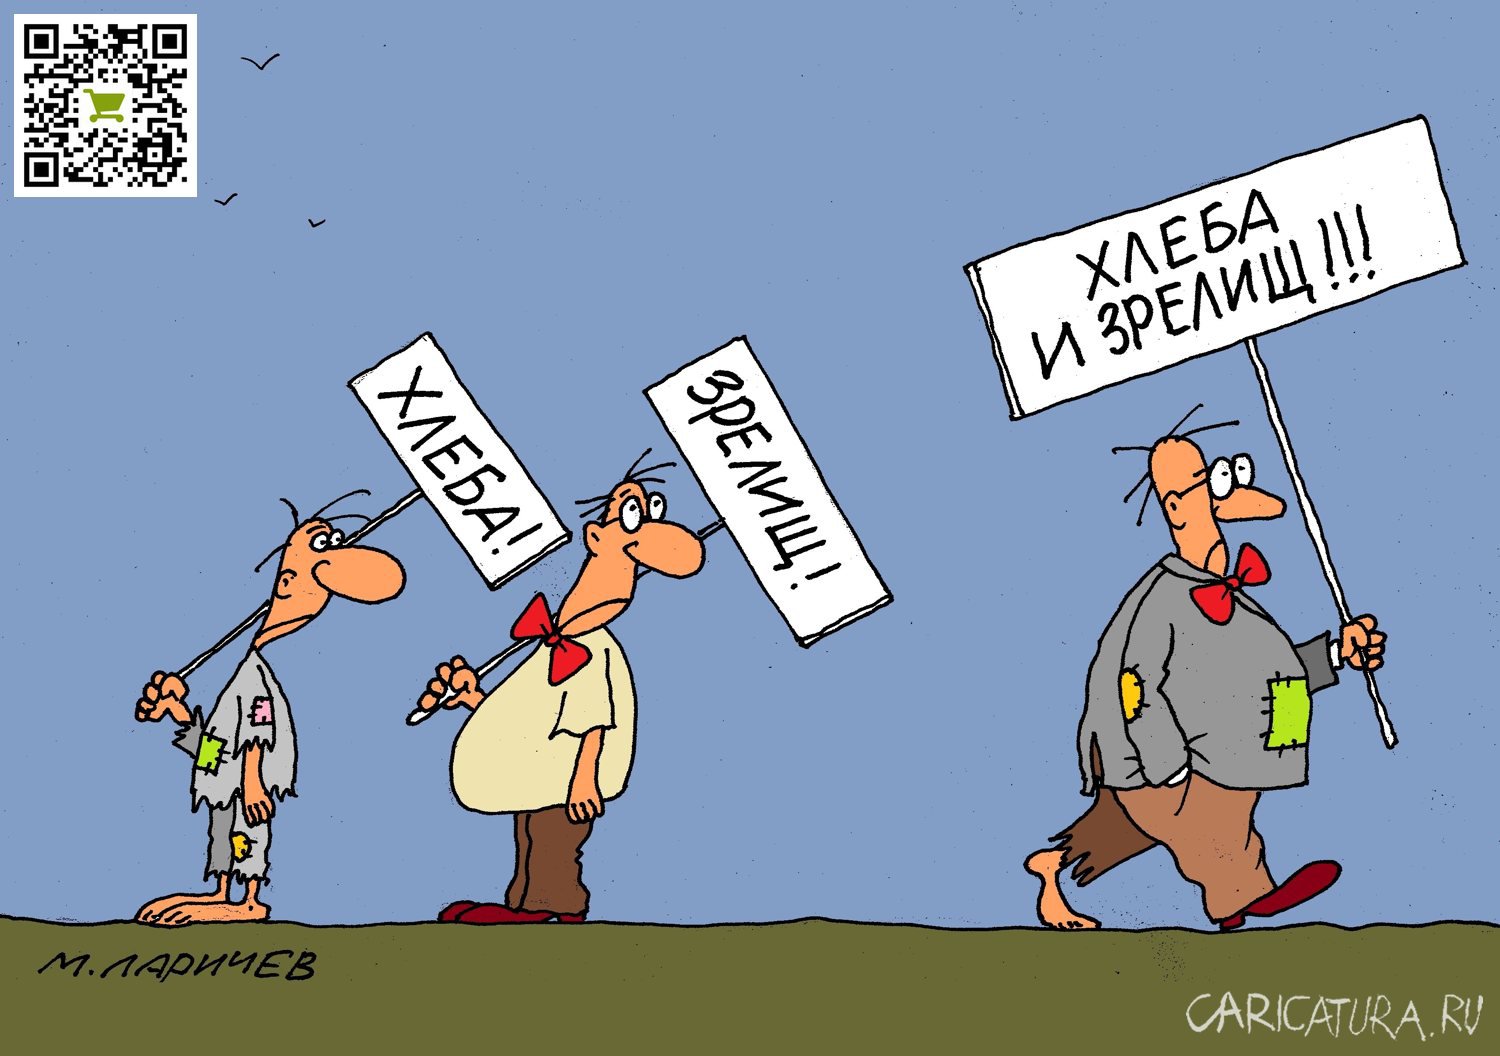 Карикатура "Все и сразу", Михаил Ларичев